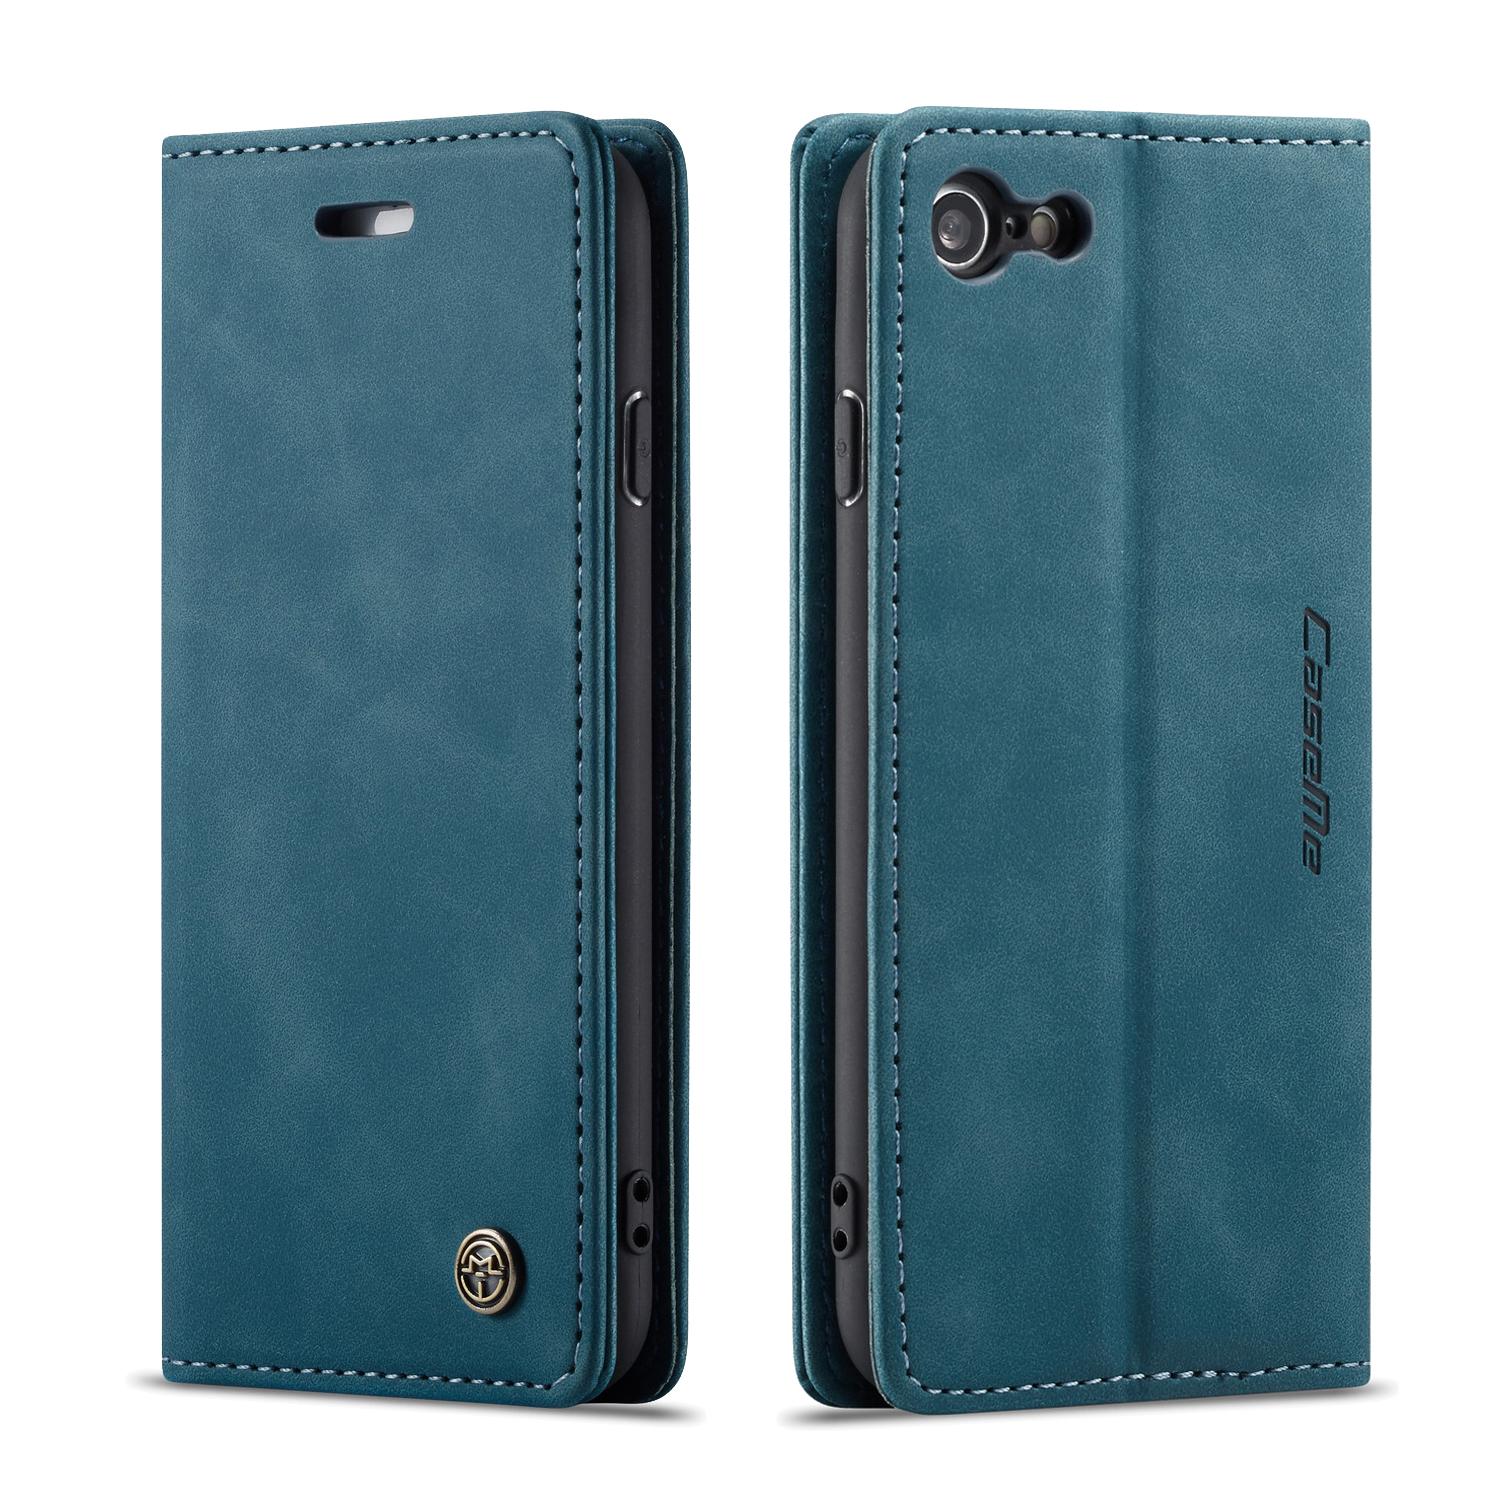 Custodie a portafoglio sottili iPhone 7 blu